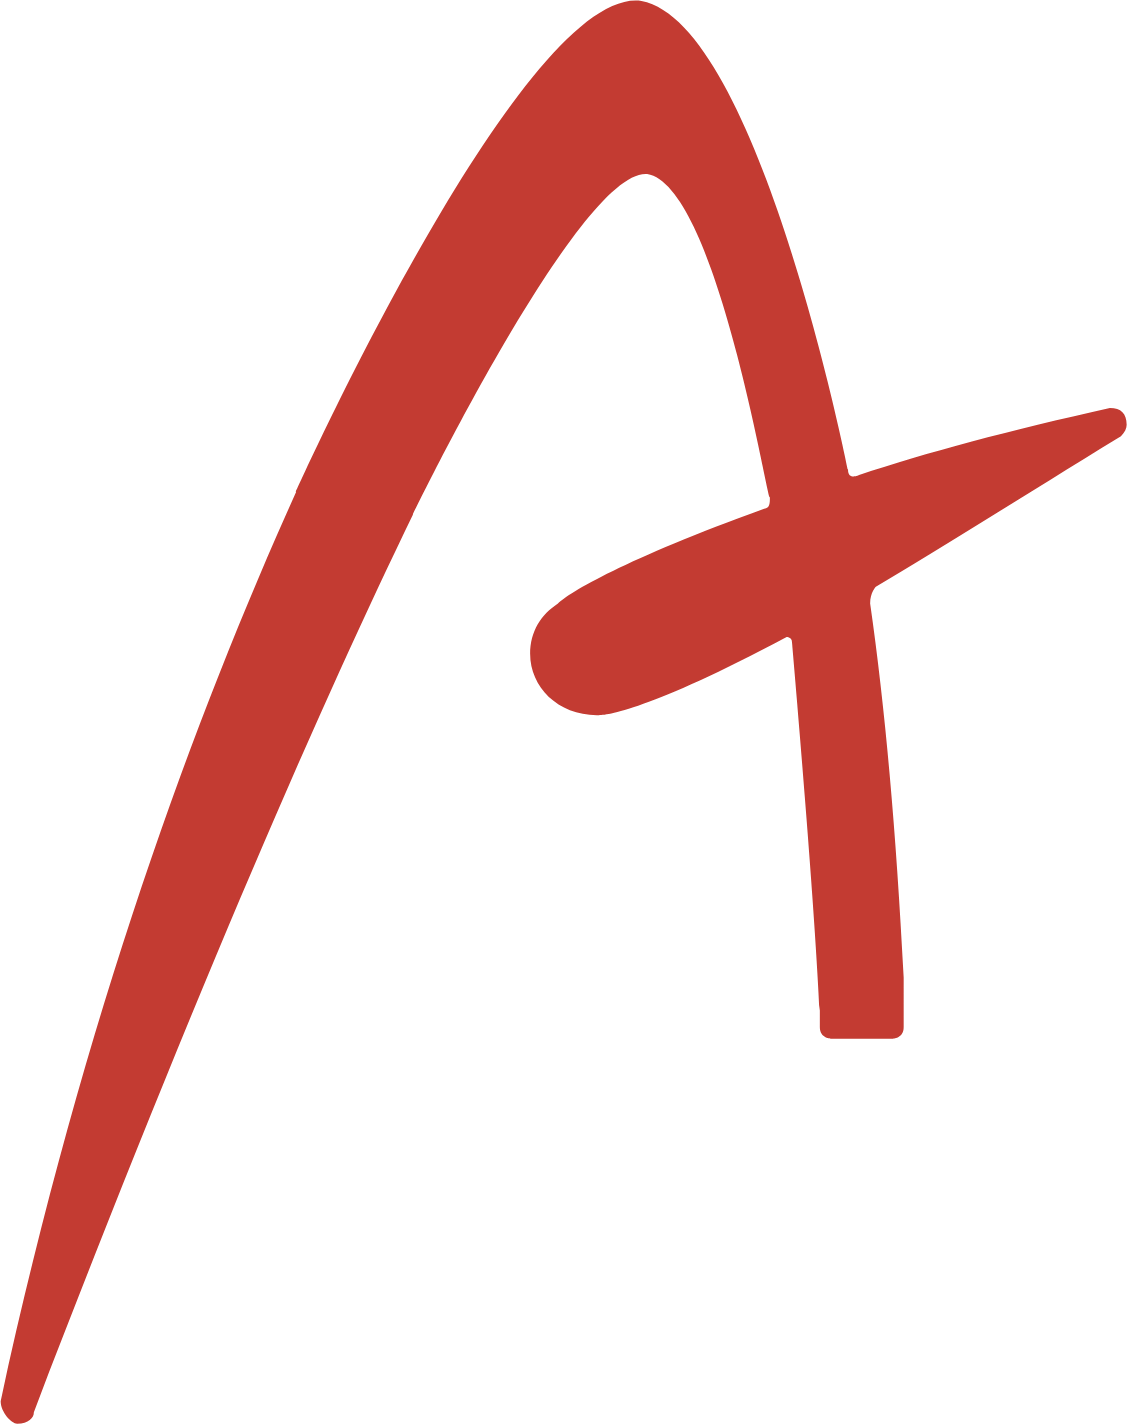 ACWA POWER Company logo (transparent PNG)